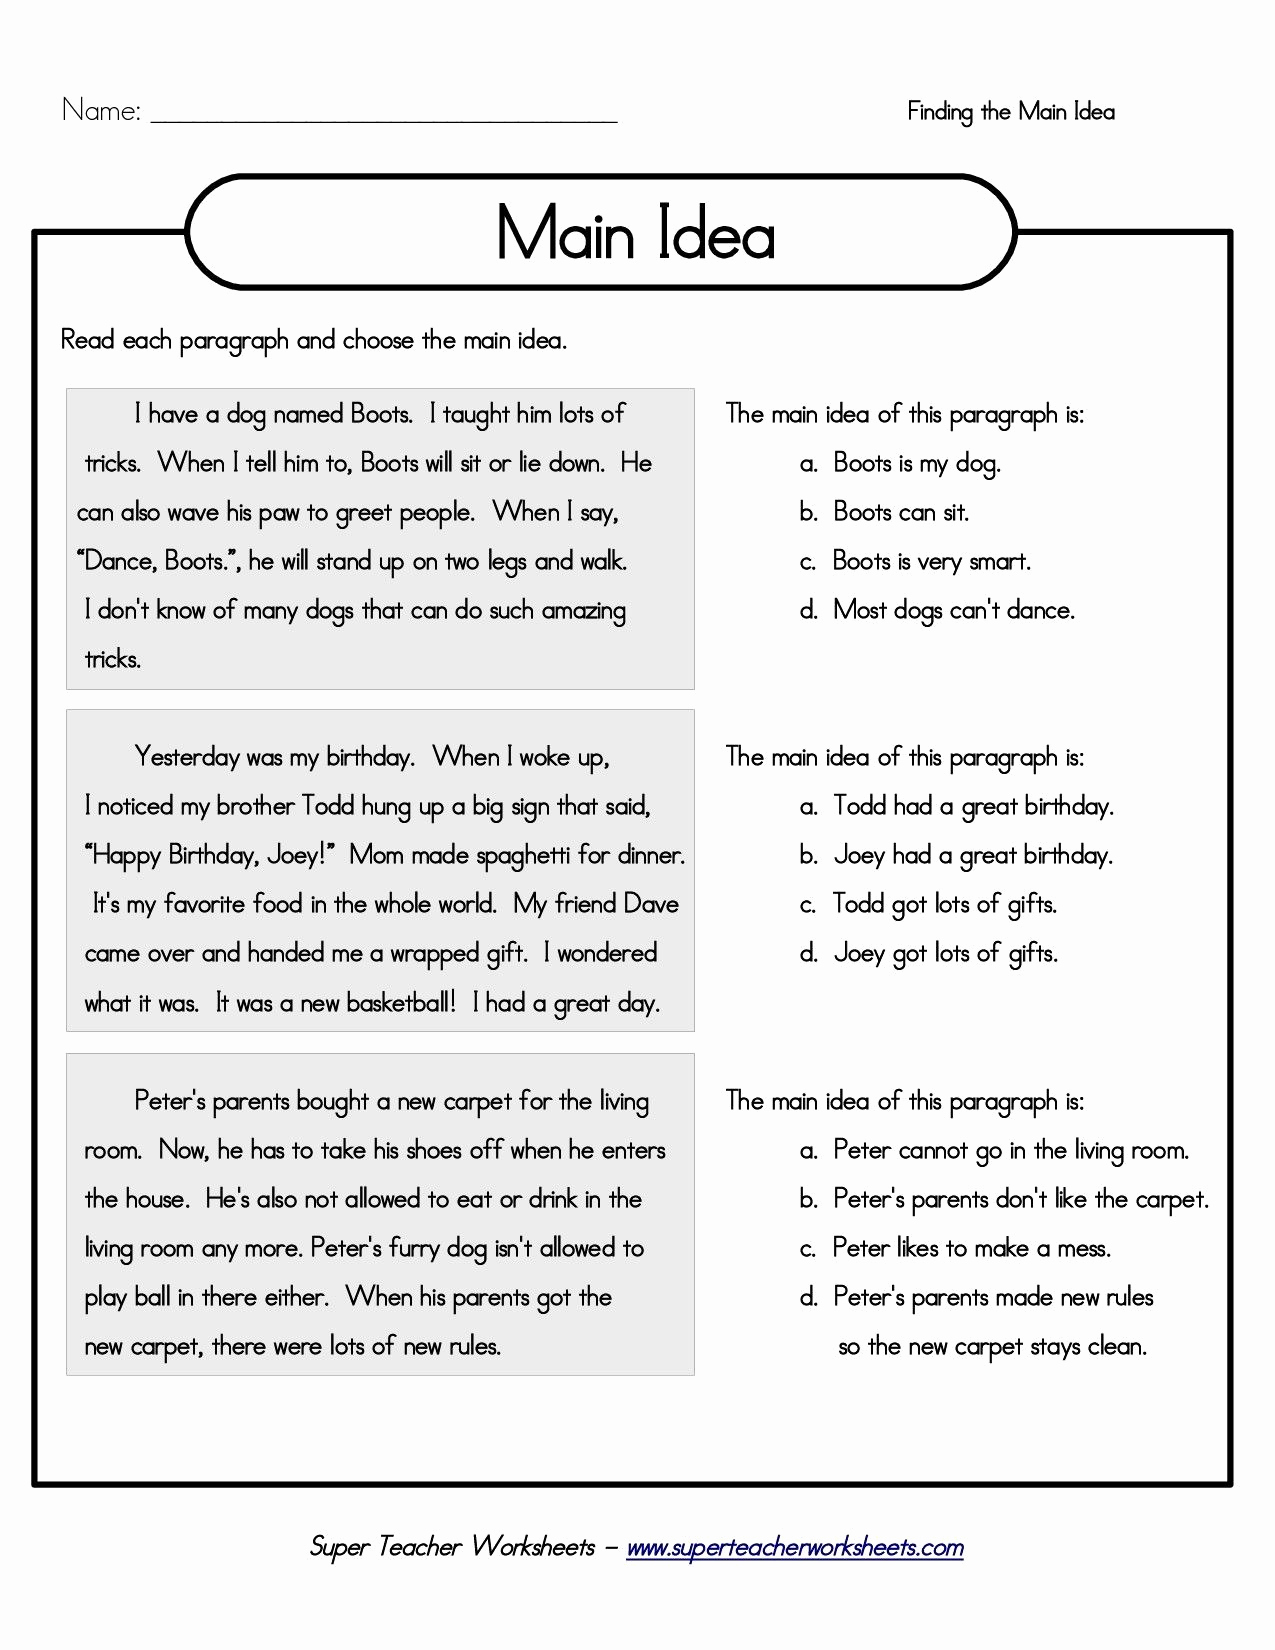 5th Grade Main Idea Worksheets Best Of Printable 5th Grade Main Idea Worksheets